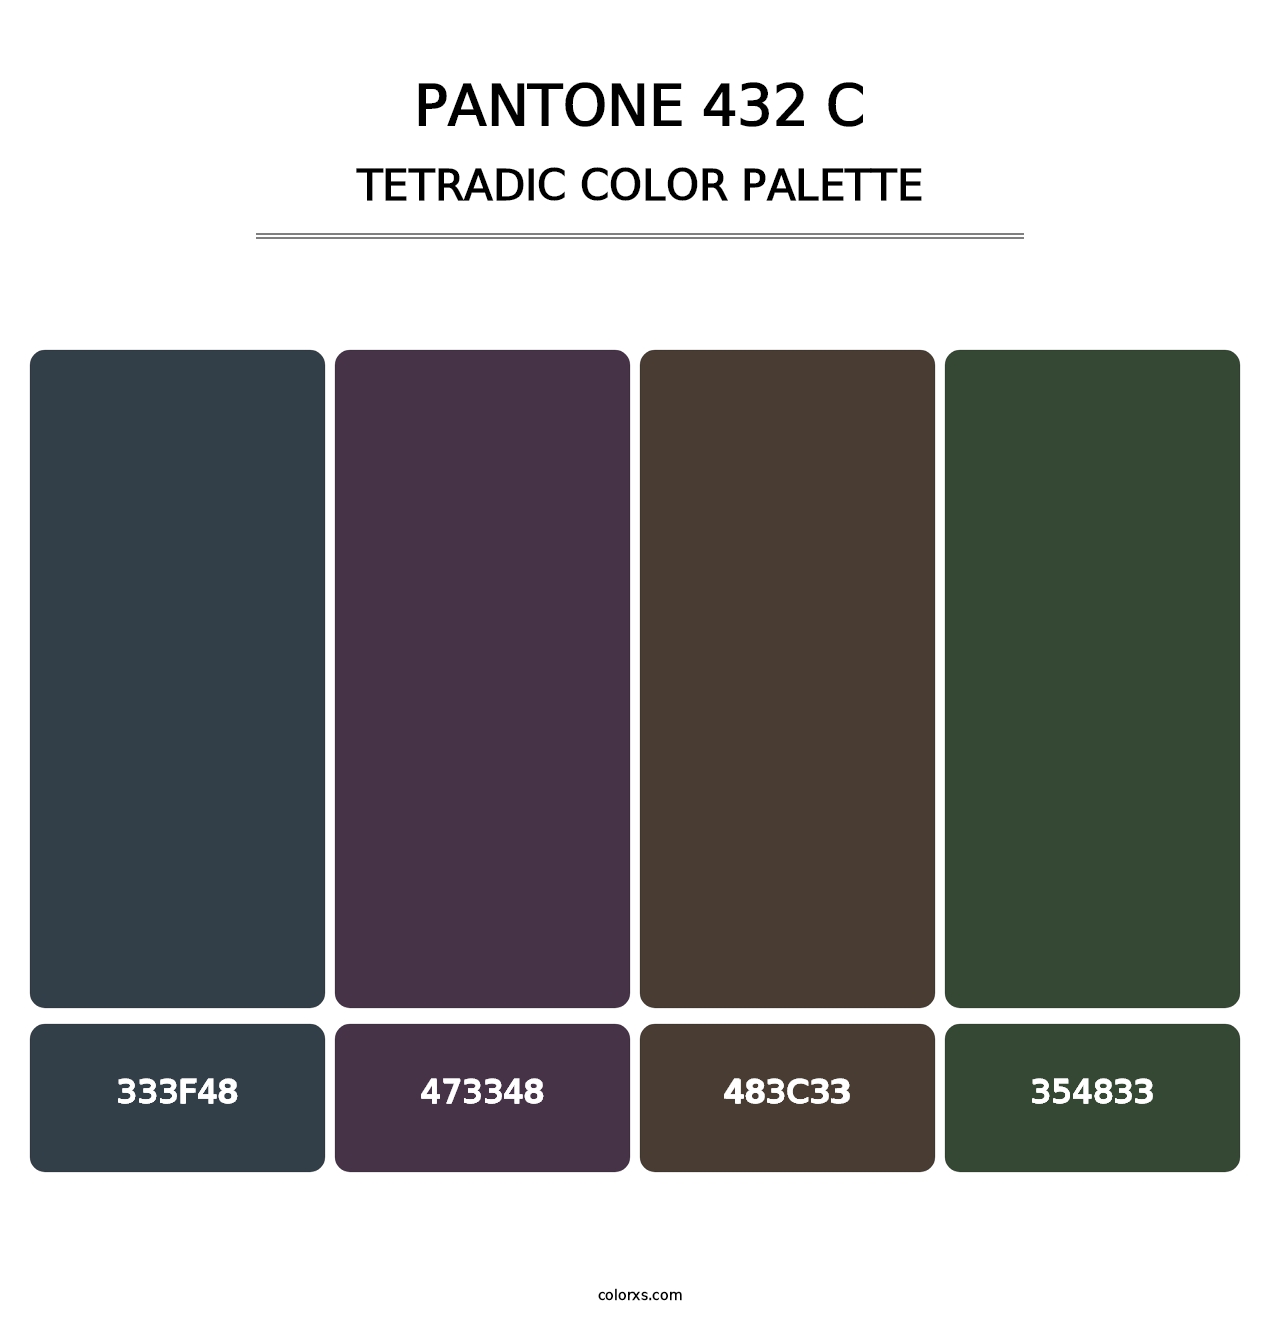 PANTONE 432 C - Tetradic Color Palette